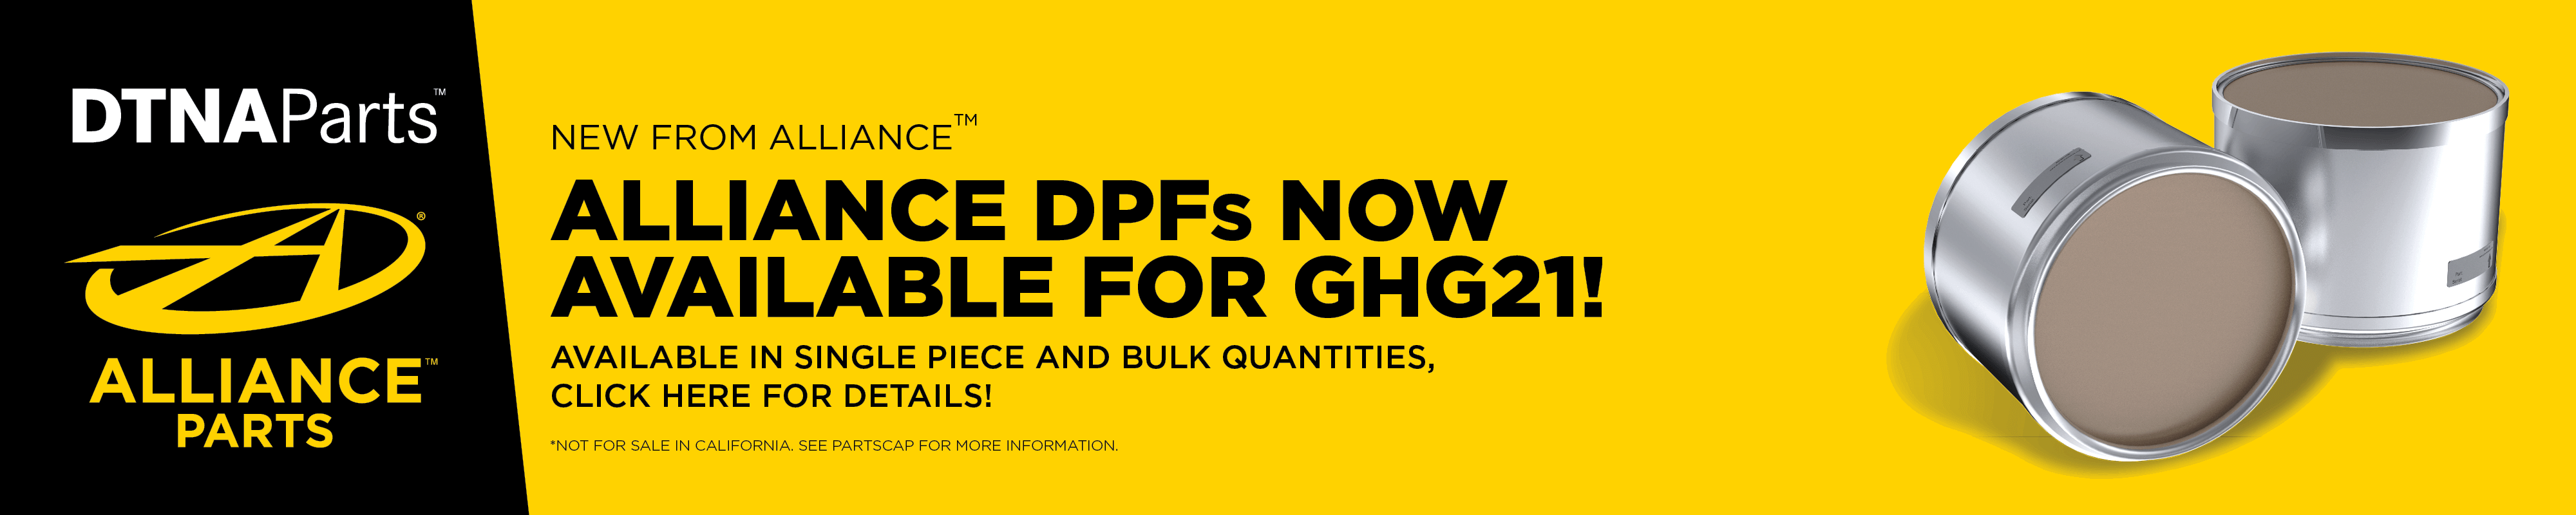 New Product Launch: Alliance GHG21 DPFs